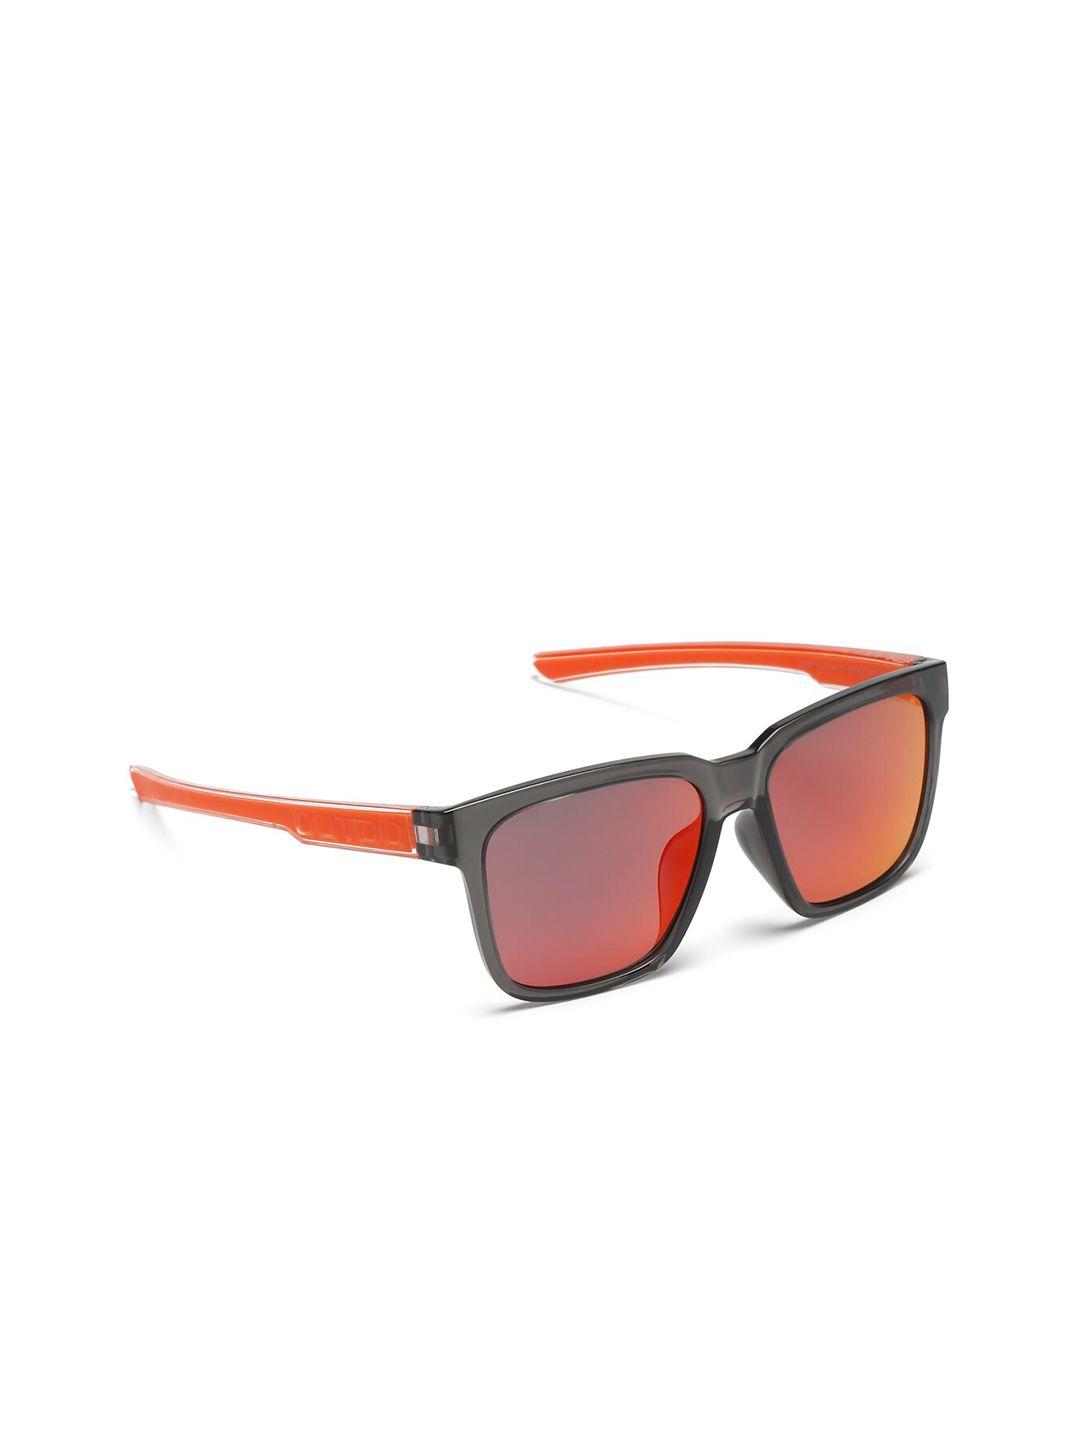 sunnies half rim square sunglasses with uv protected lens gt.60013-c026